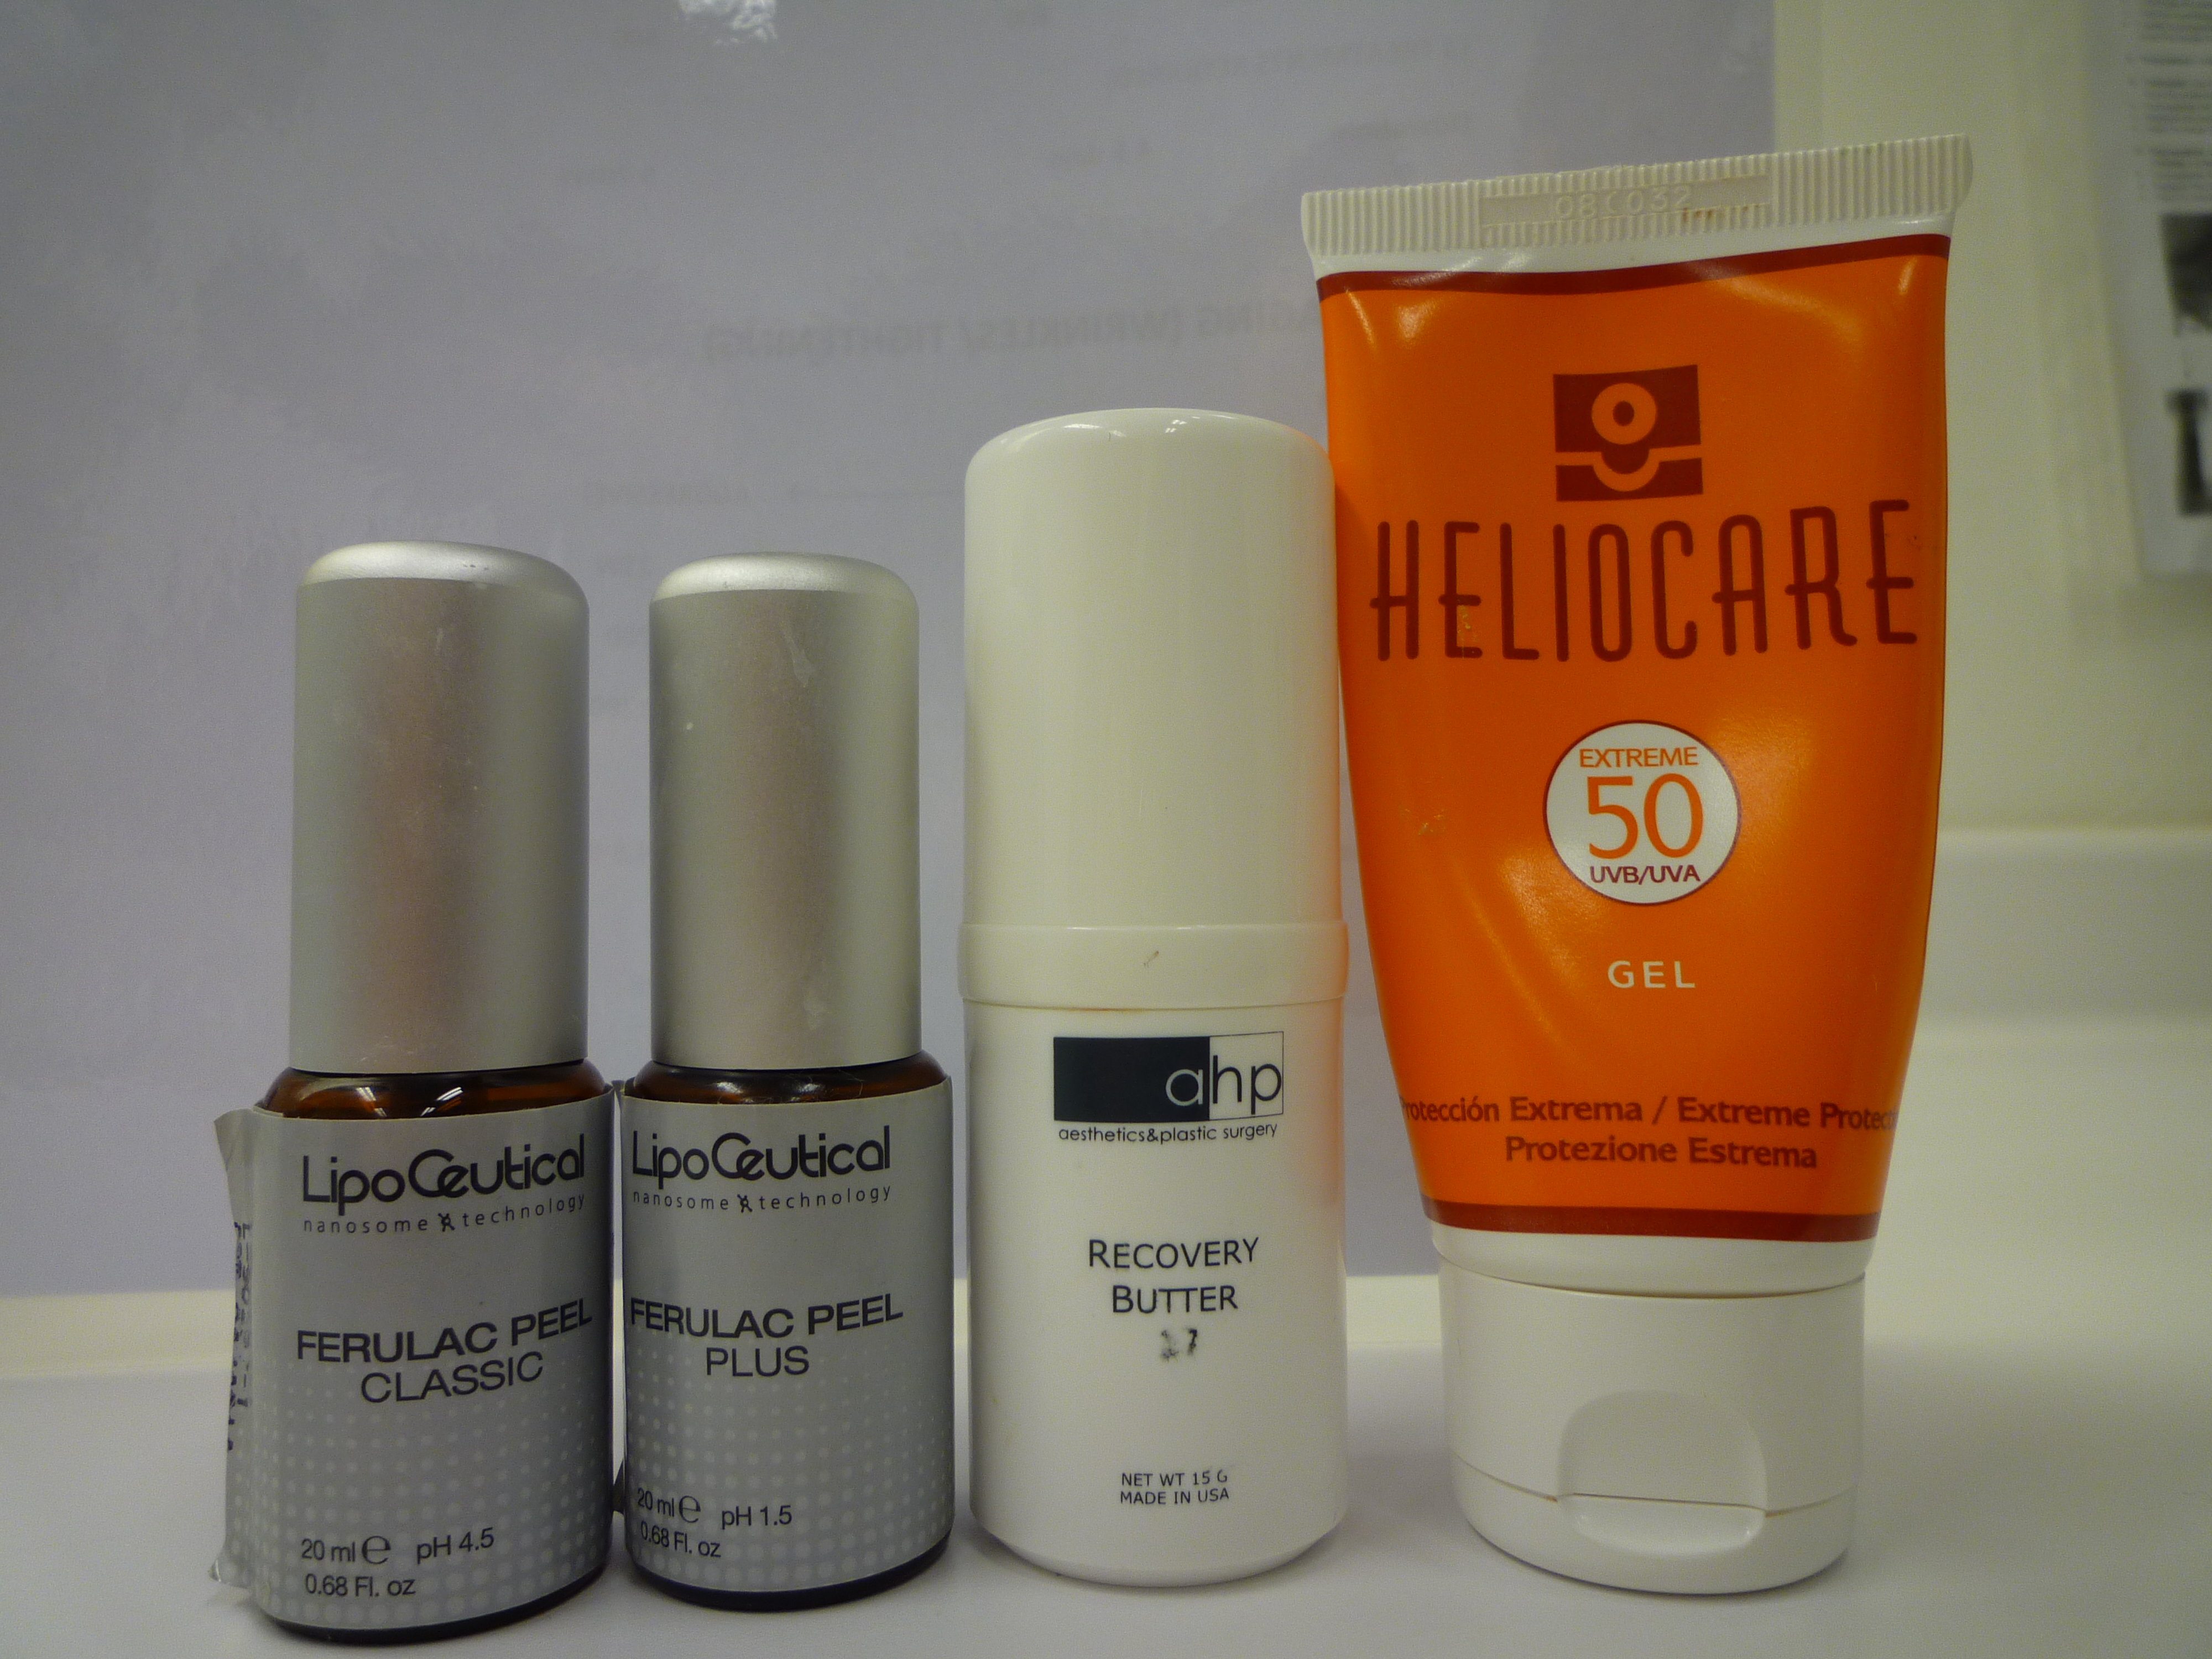 ferulic acid products used